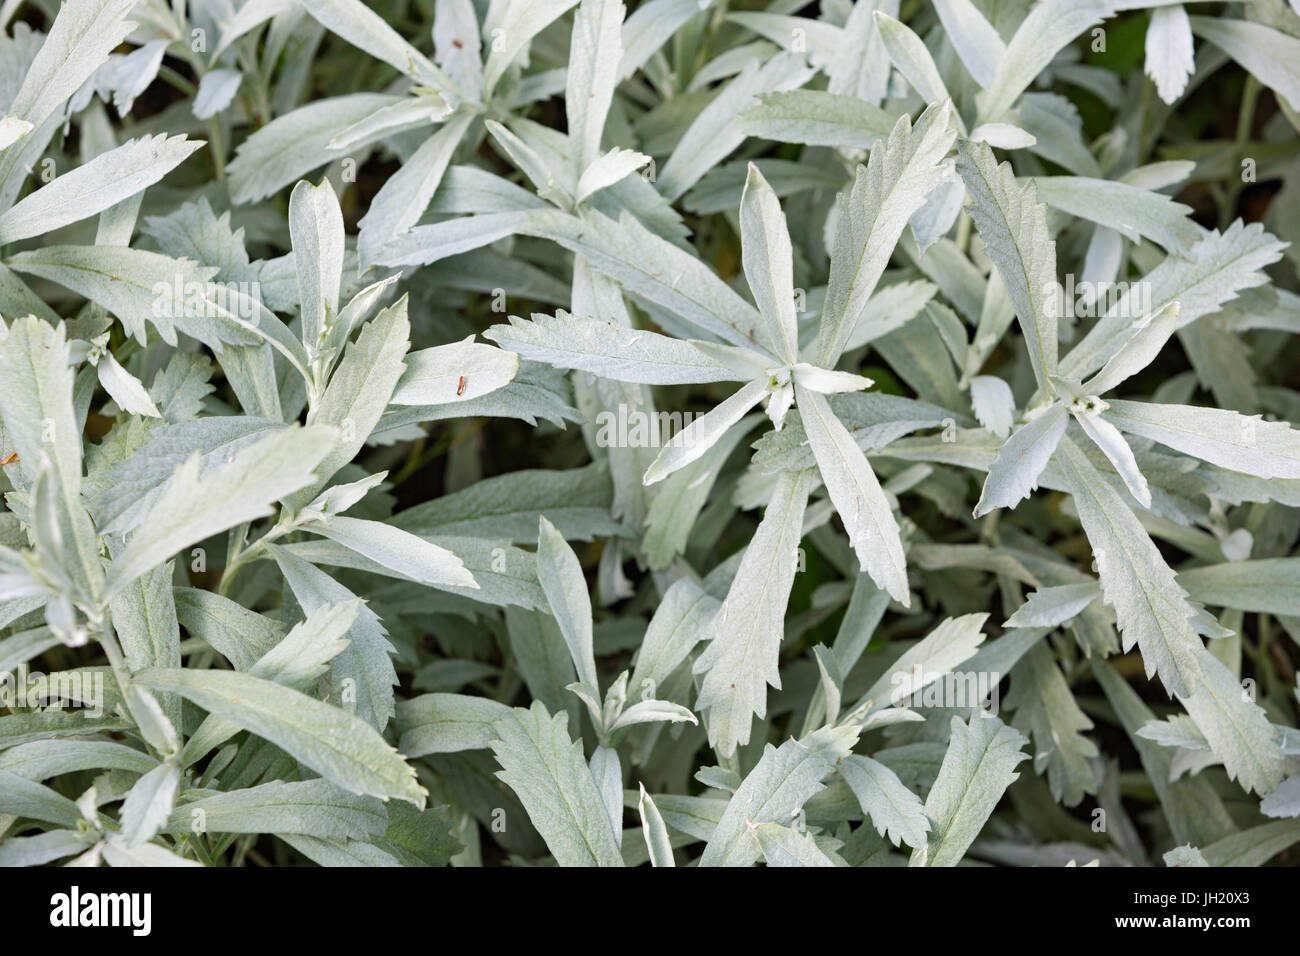 Silver wormwood, western mugwort, Louisiana wormwood, white sagebrush, and gray sagewort - Artemisia ludoviciana. Stock Photo